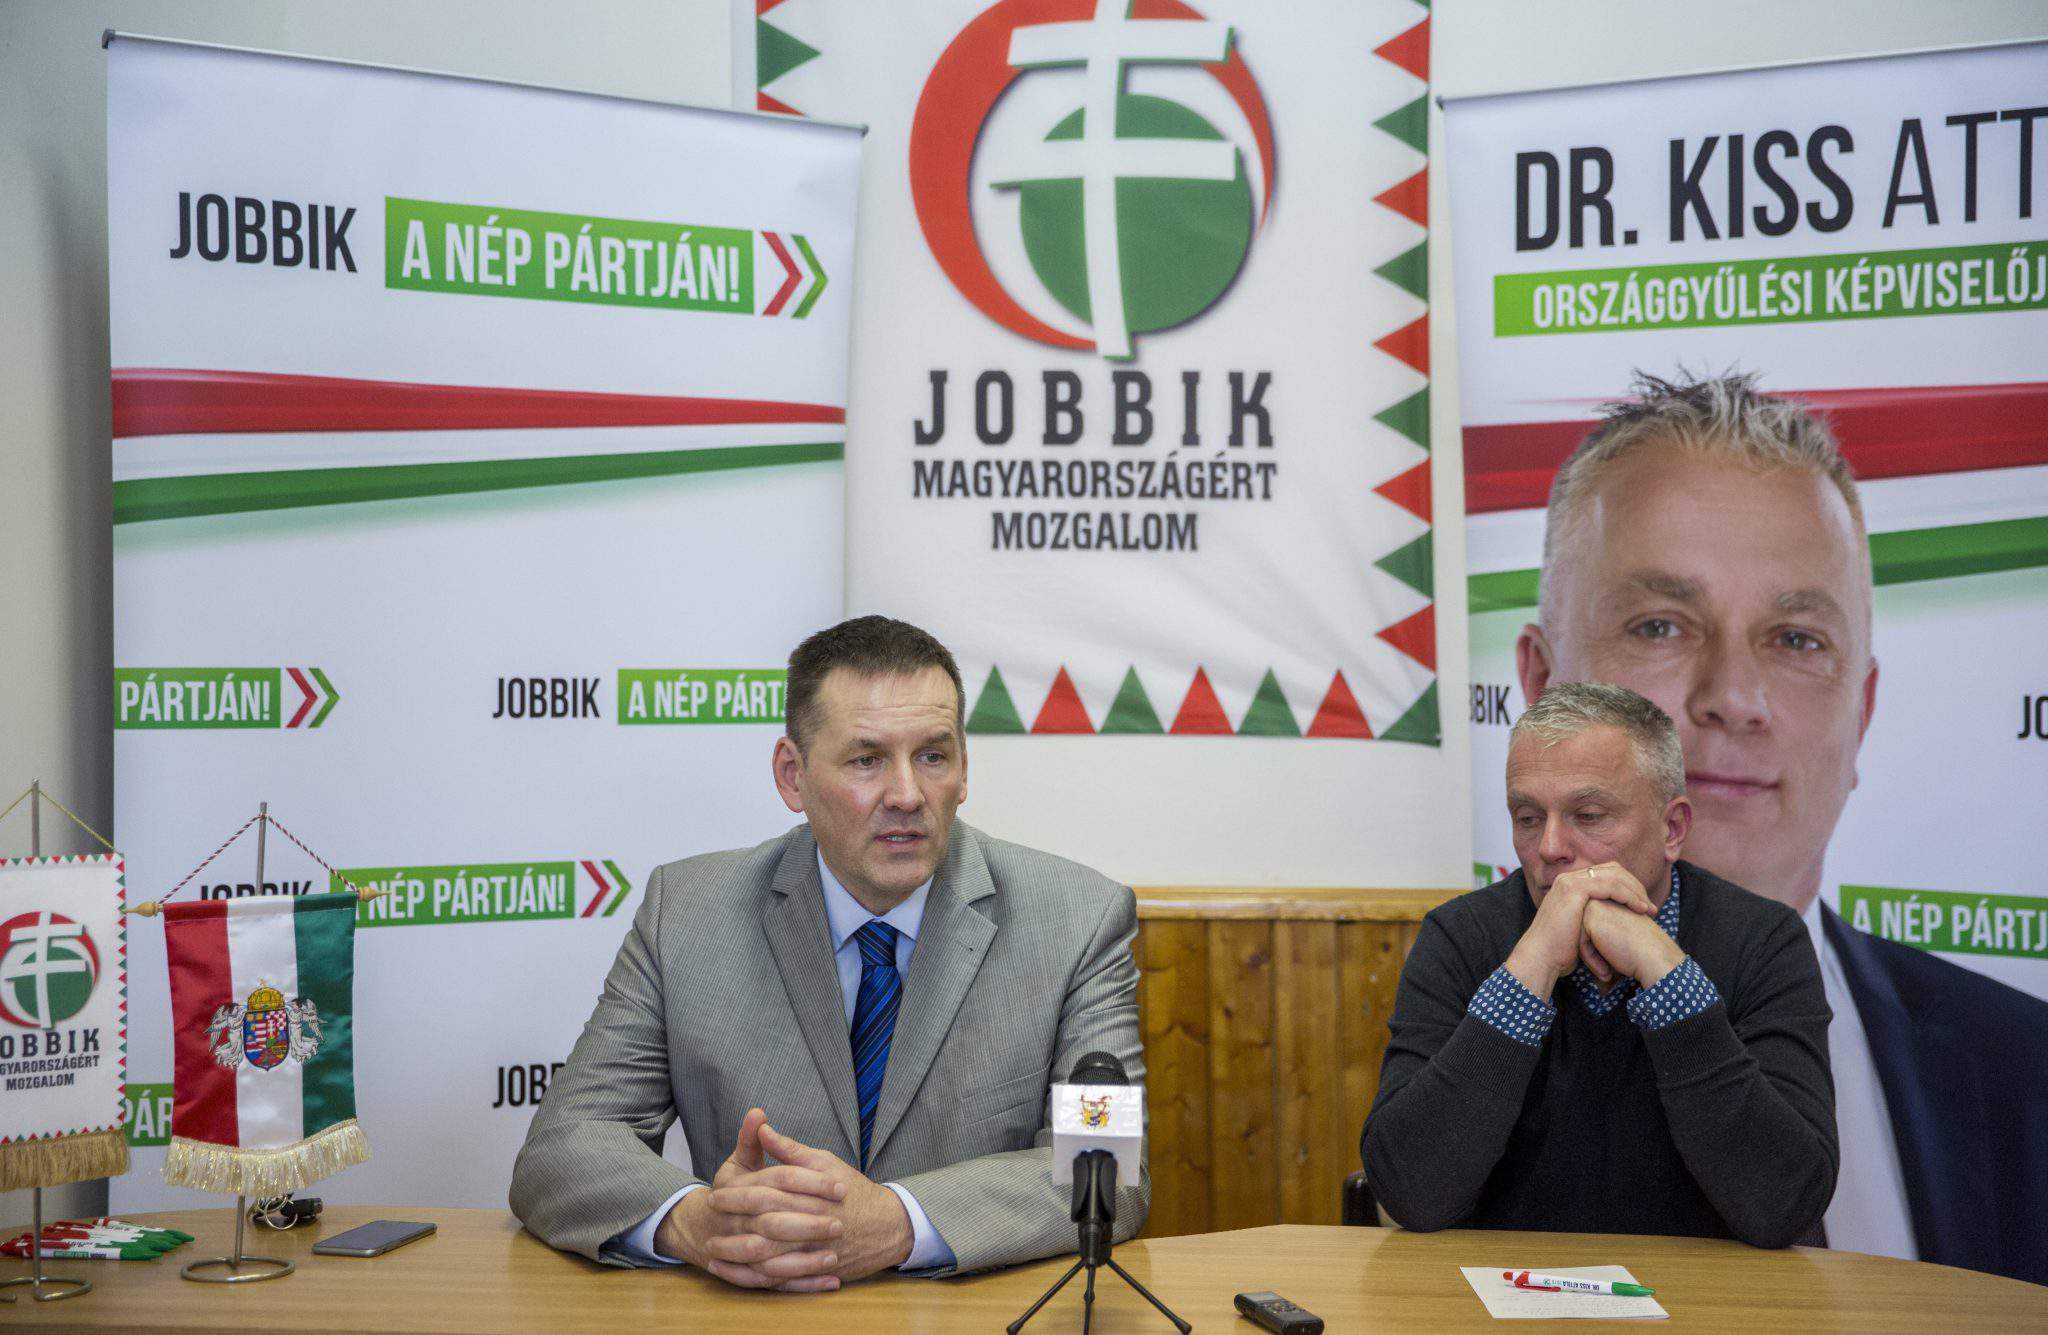 Jobbik party Hungary Volner